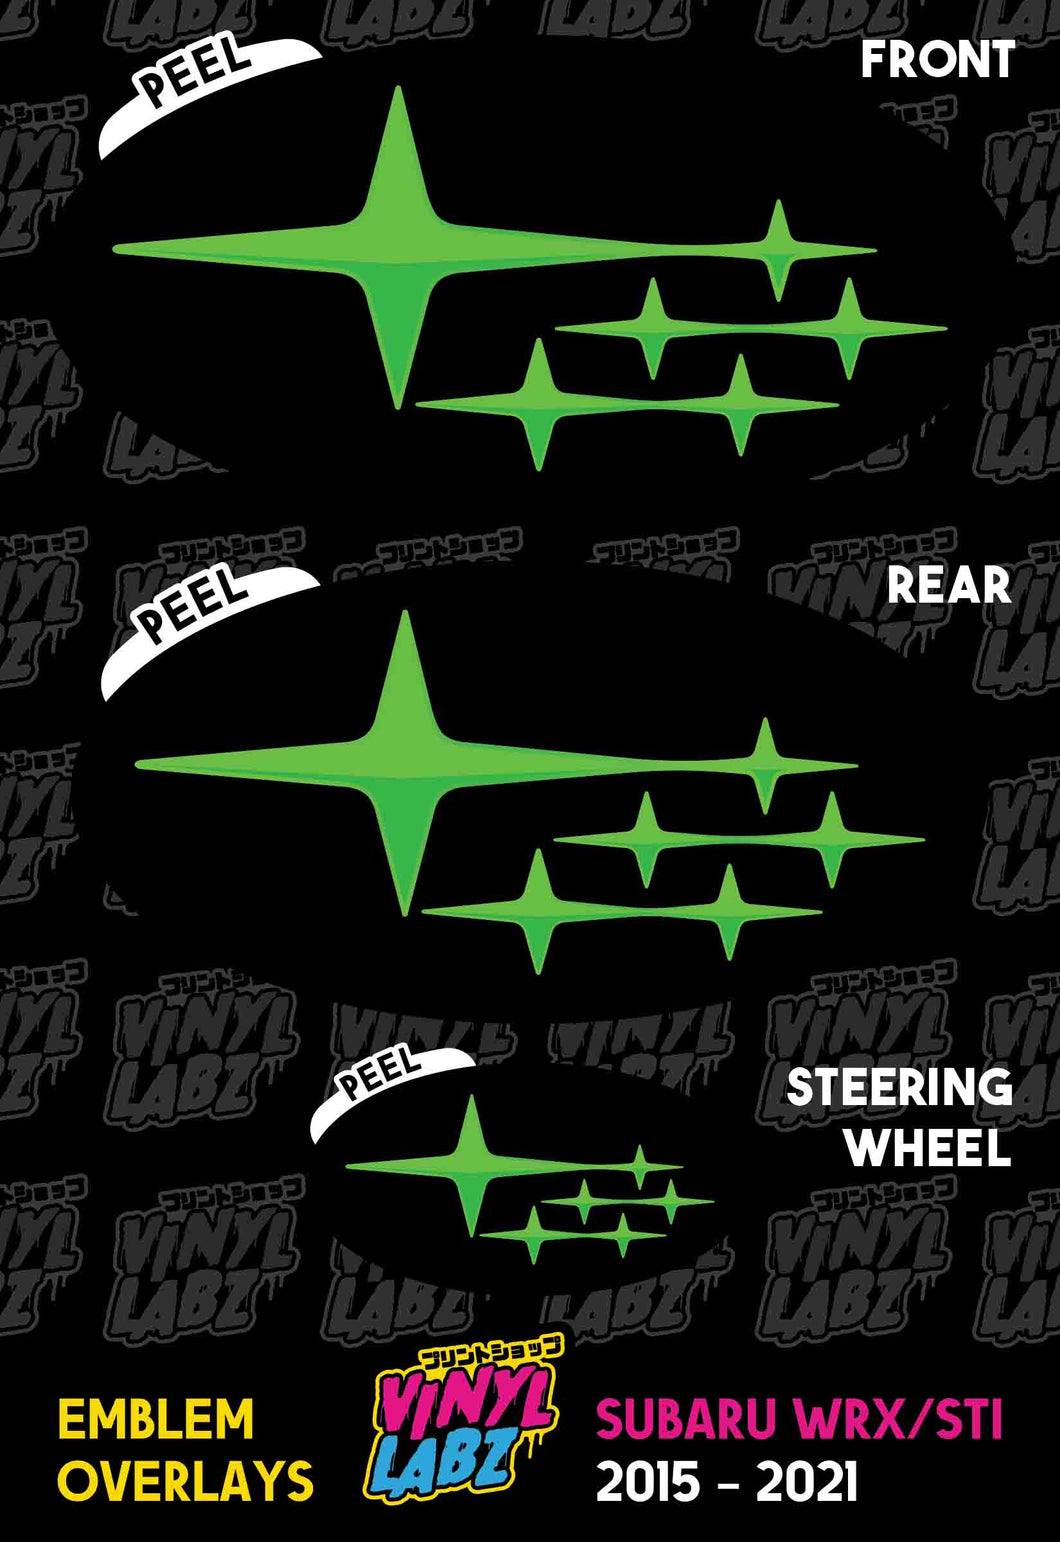 Subaru Vinyl Emblem Overlay (Black and Green) | 2015-2021 Subaru WRX/STI